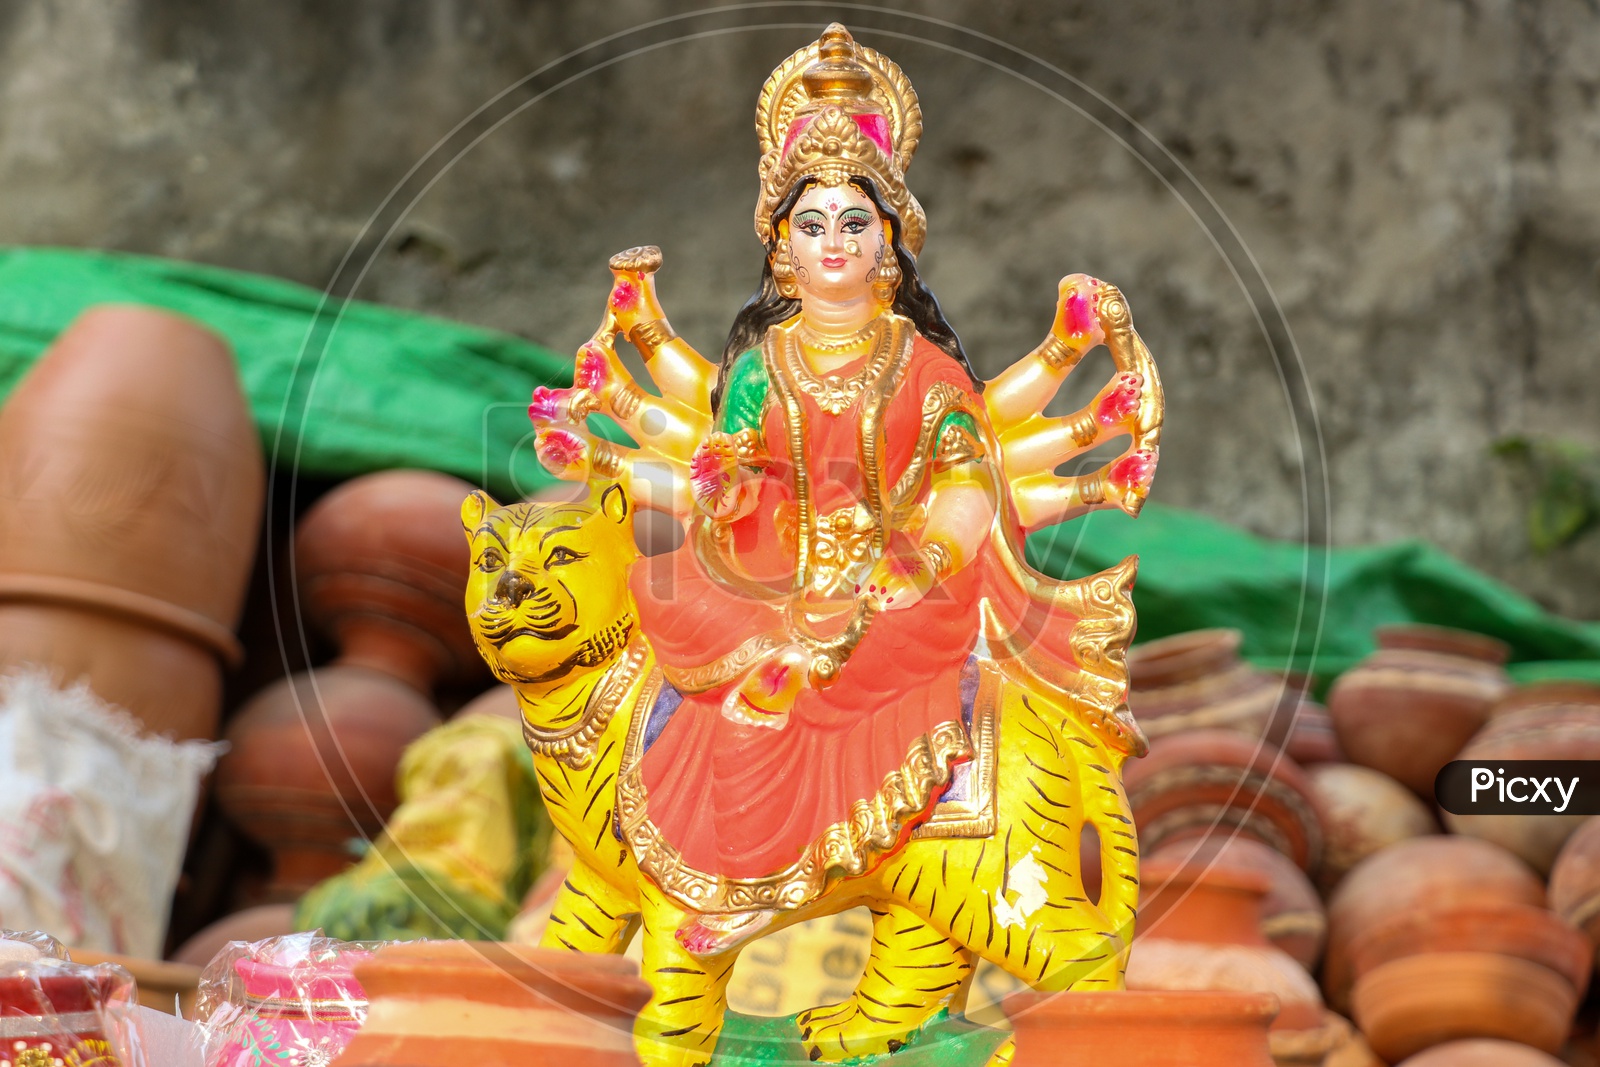 Indian Hindu Goddess Durga Idol Being Sold At A Road Side Vendor stall